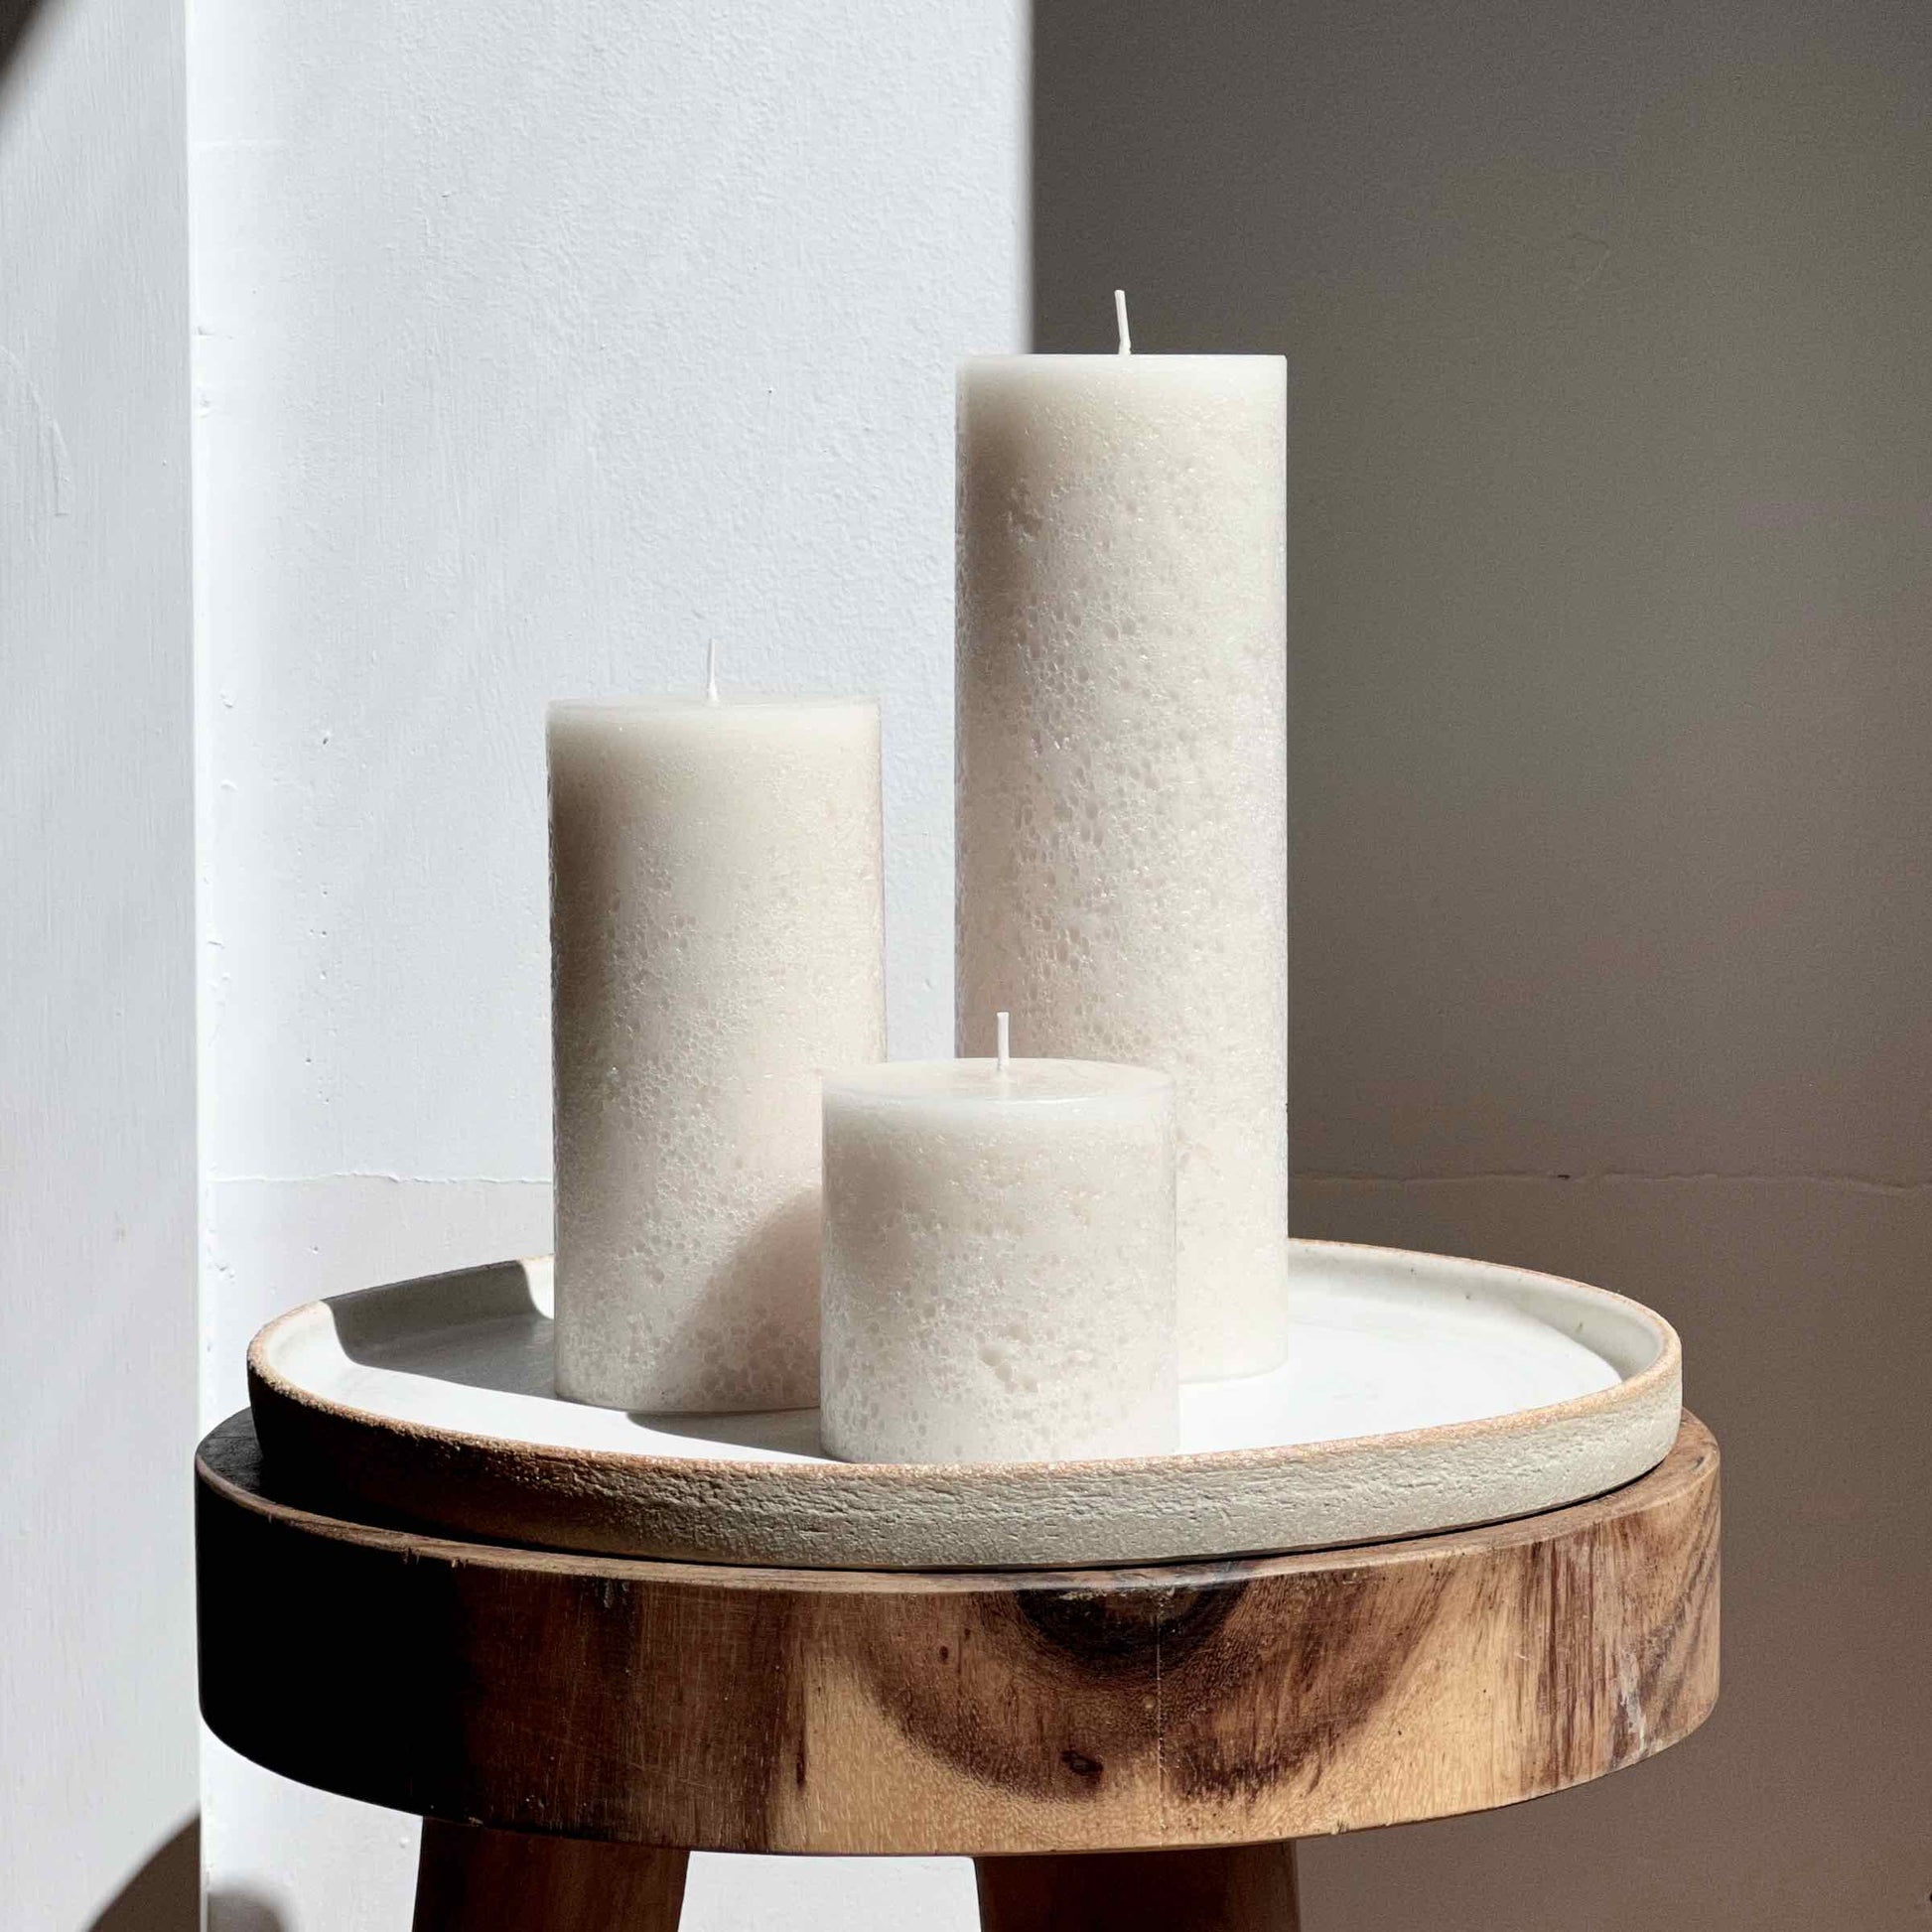 Textured ivory pillar candles